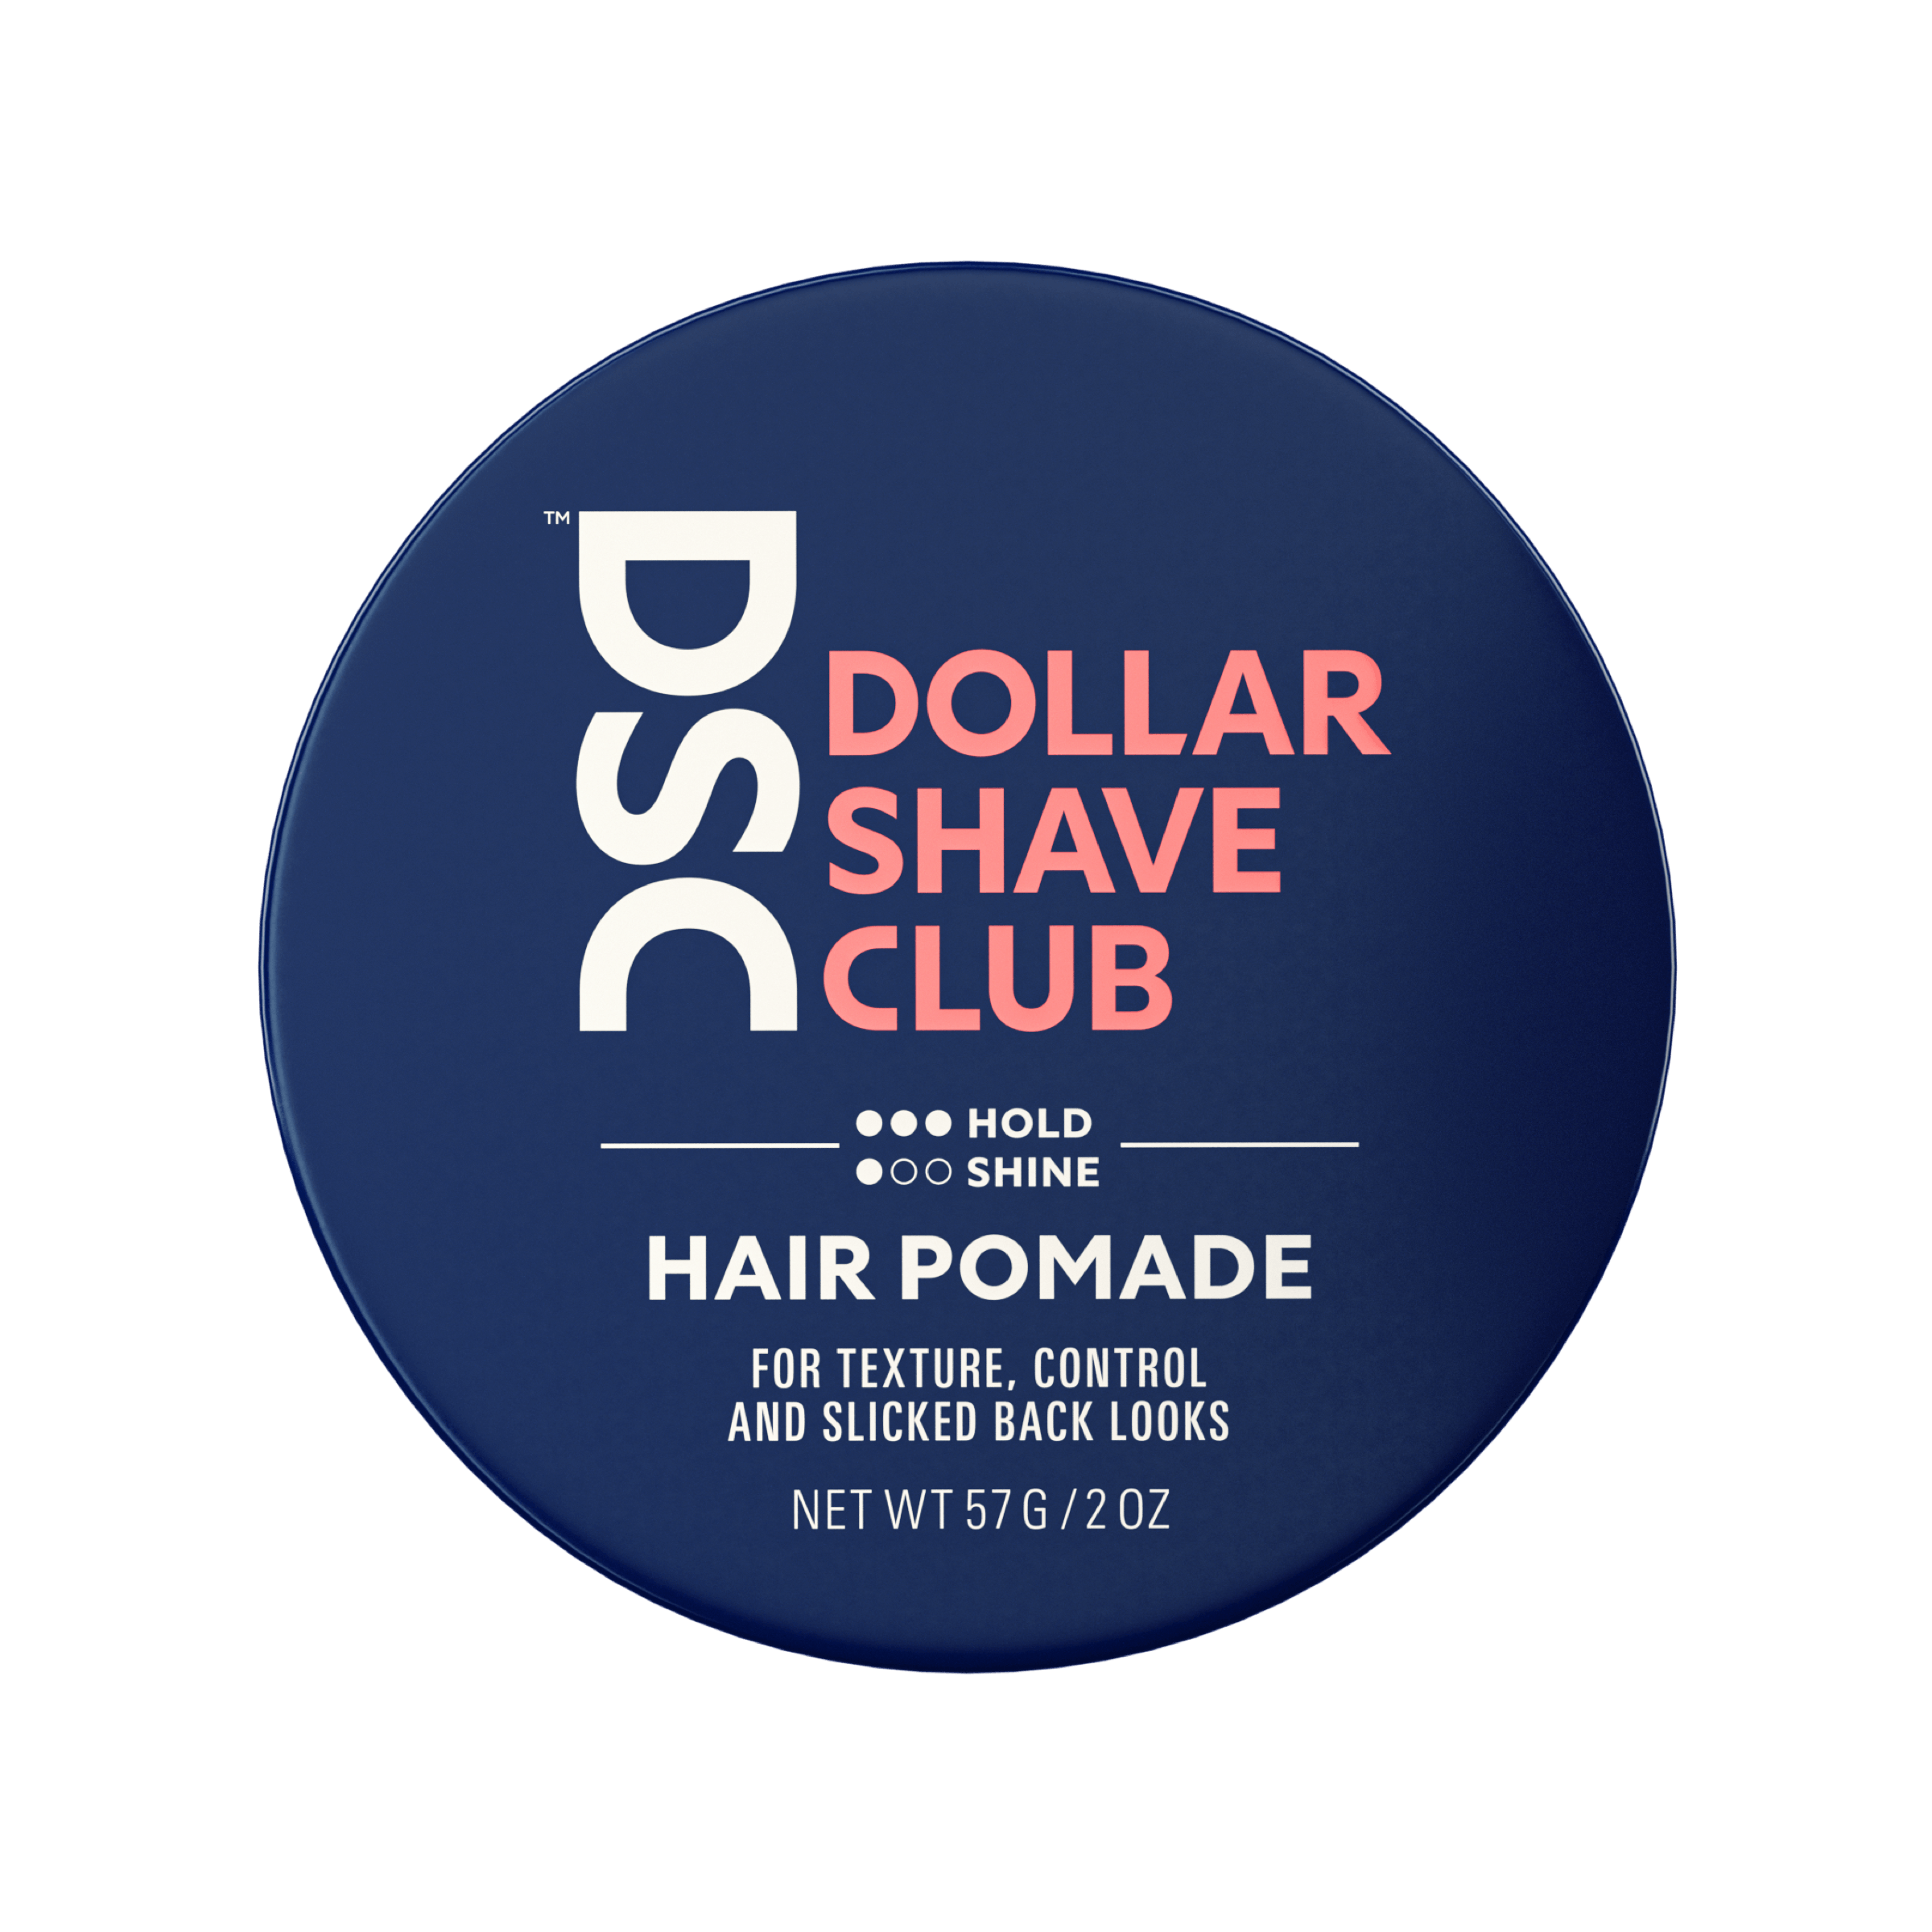 Dollar Shave Club Hair Pomade against blank backdrop.